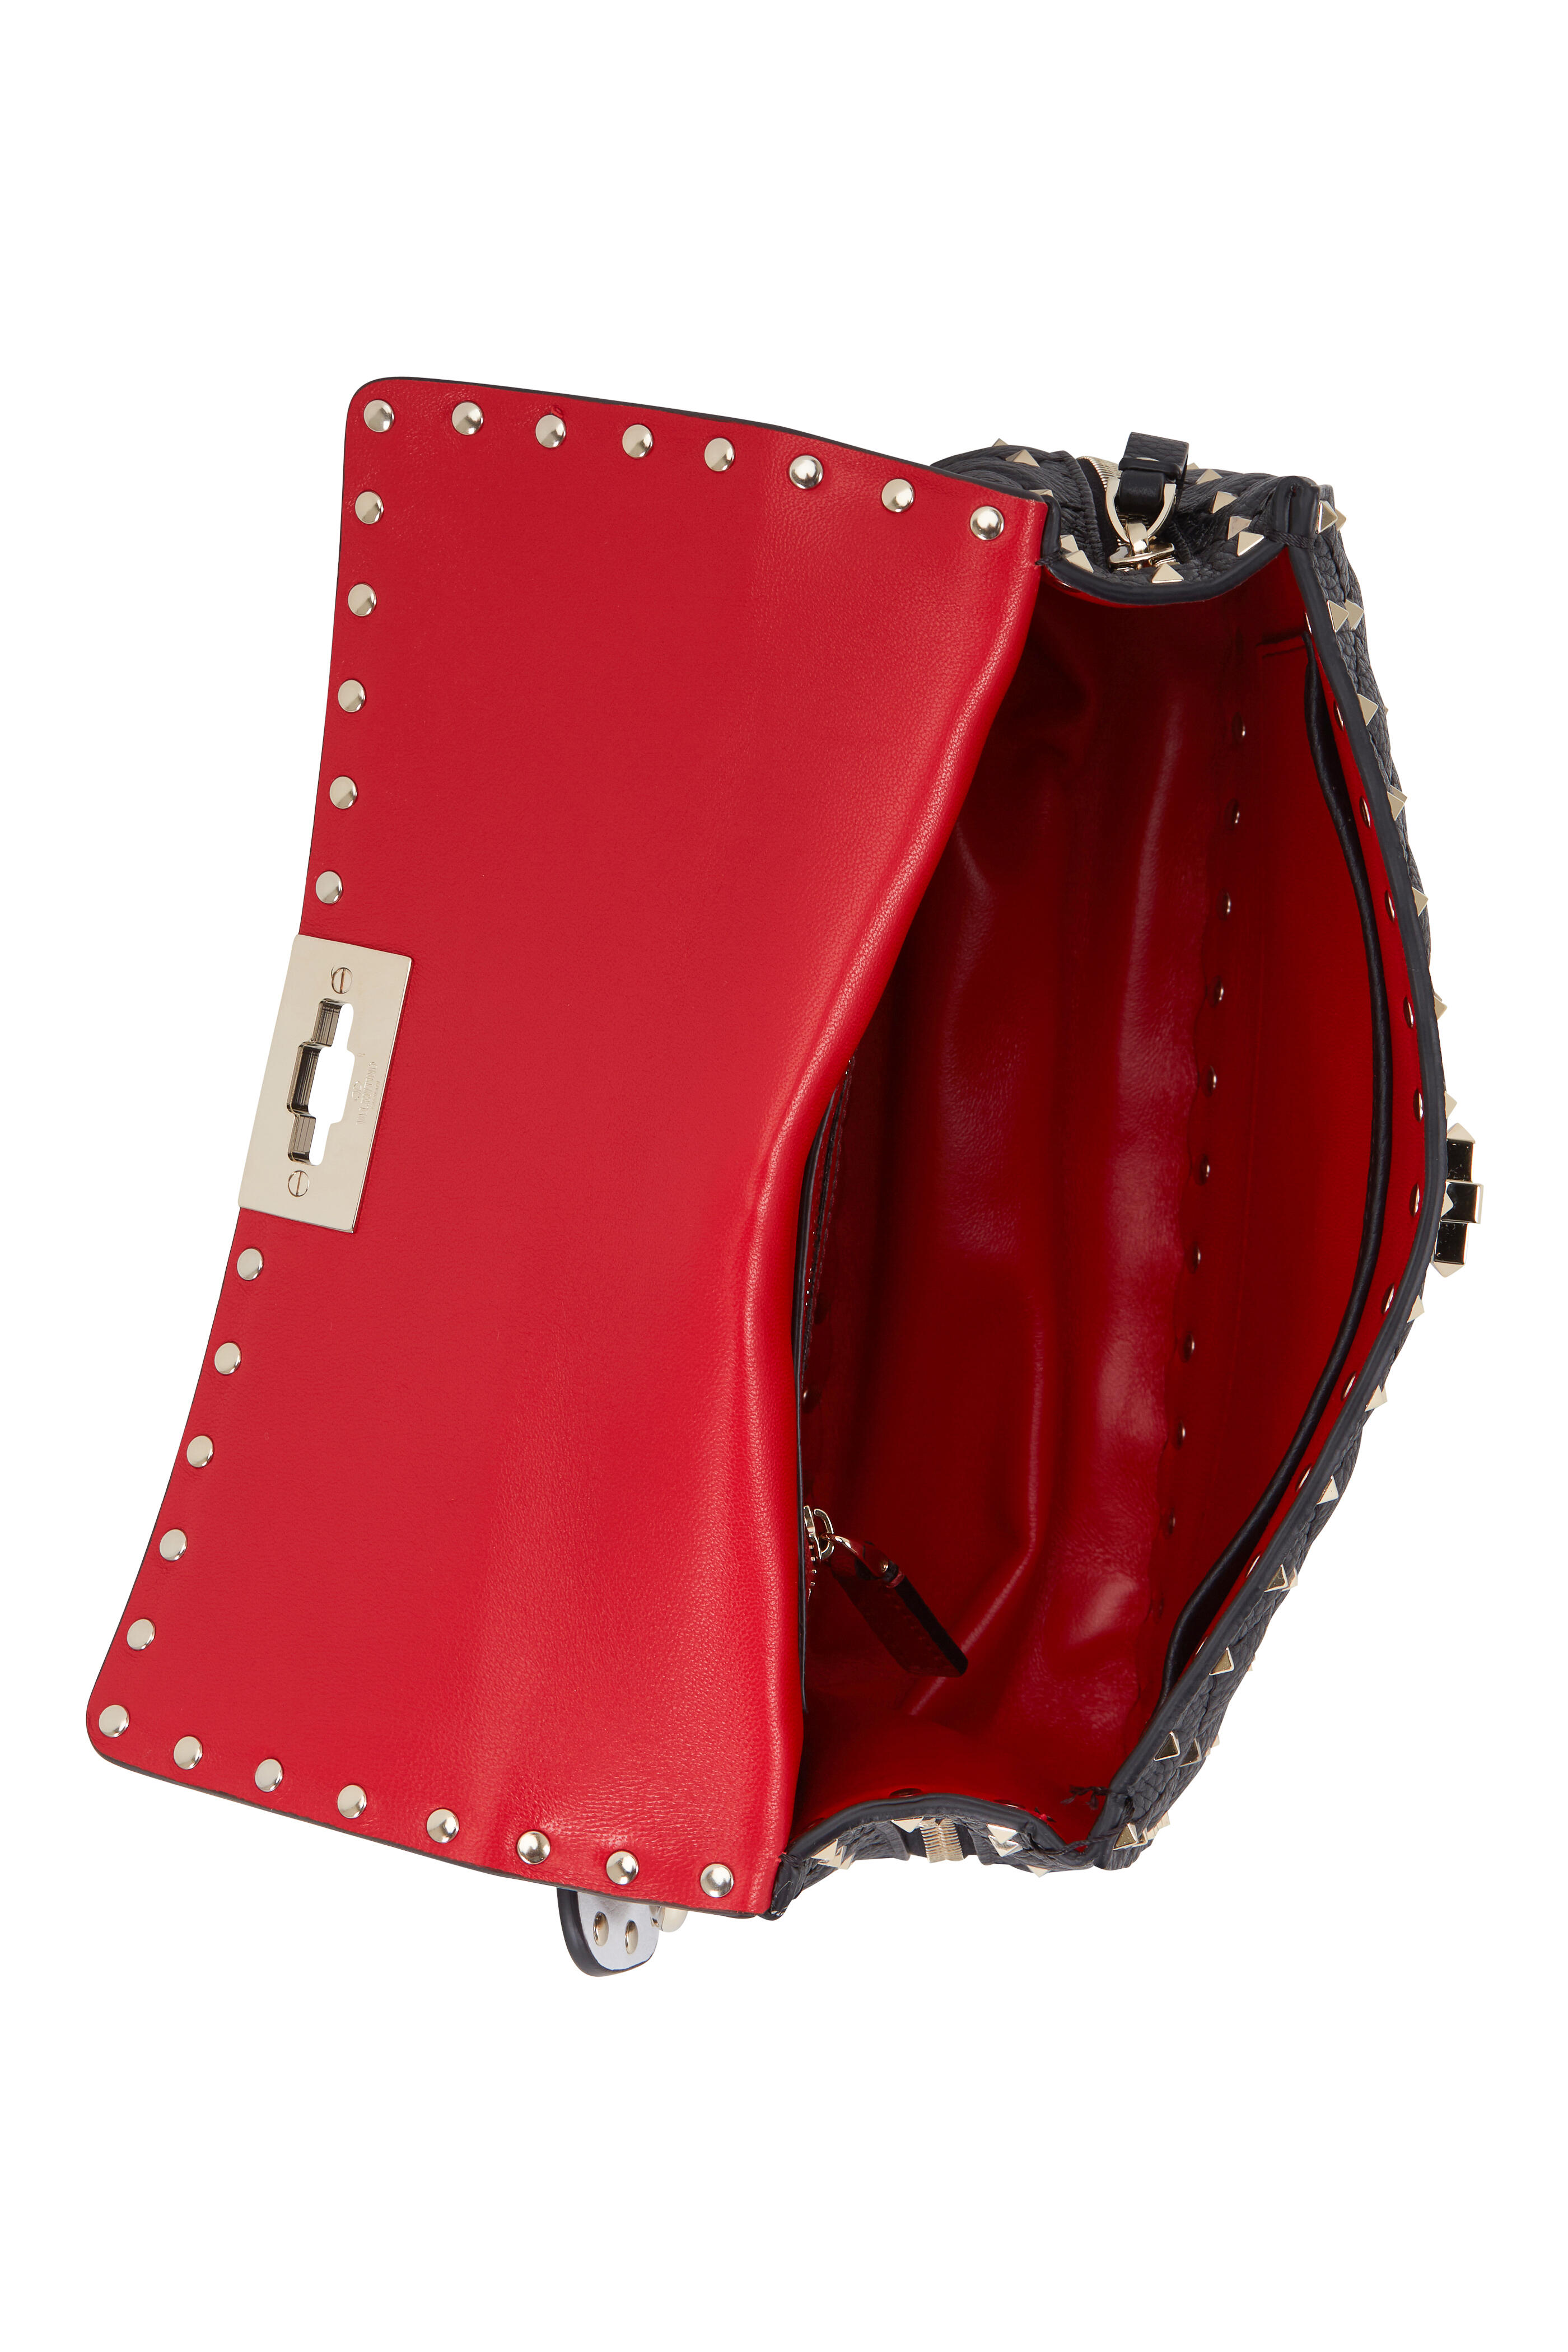 Valentino Black/Red Quilted Leather Medium Rockstud Spike.It Shoulder Bag  Valentino